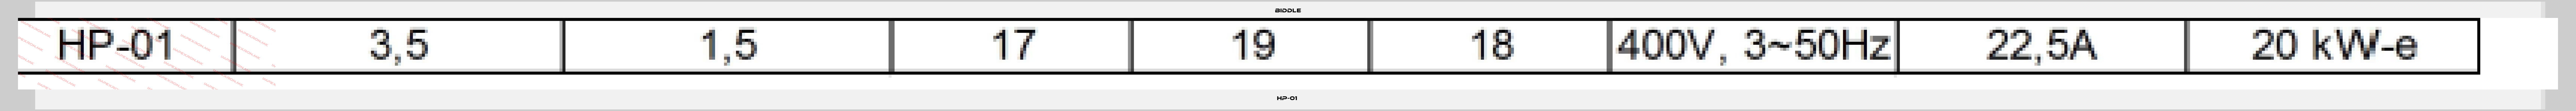 Biddle-HP-01 price